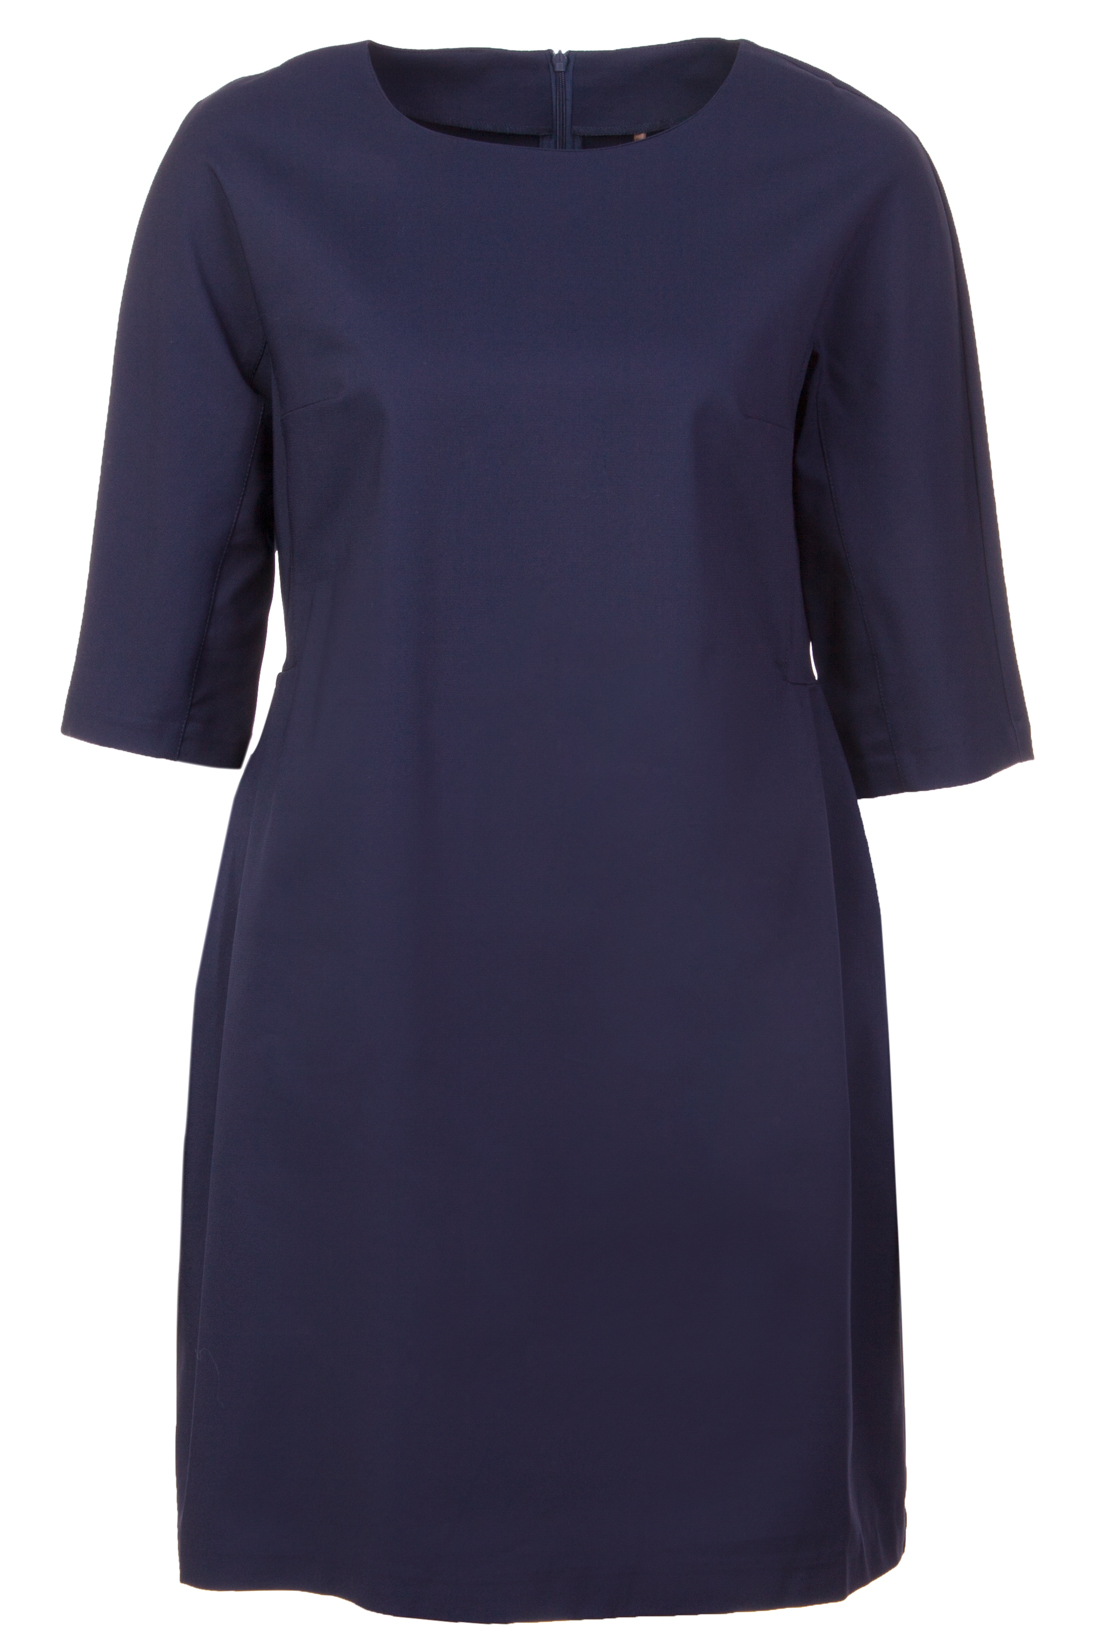 Платье оригинального кроя (арт. baon B457020), размер L, цвет синий Платье оригинального кроя (арт. baon B457020) - фото 4